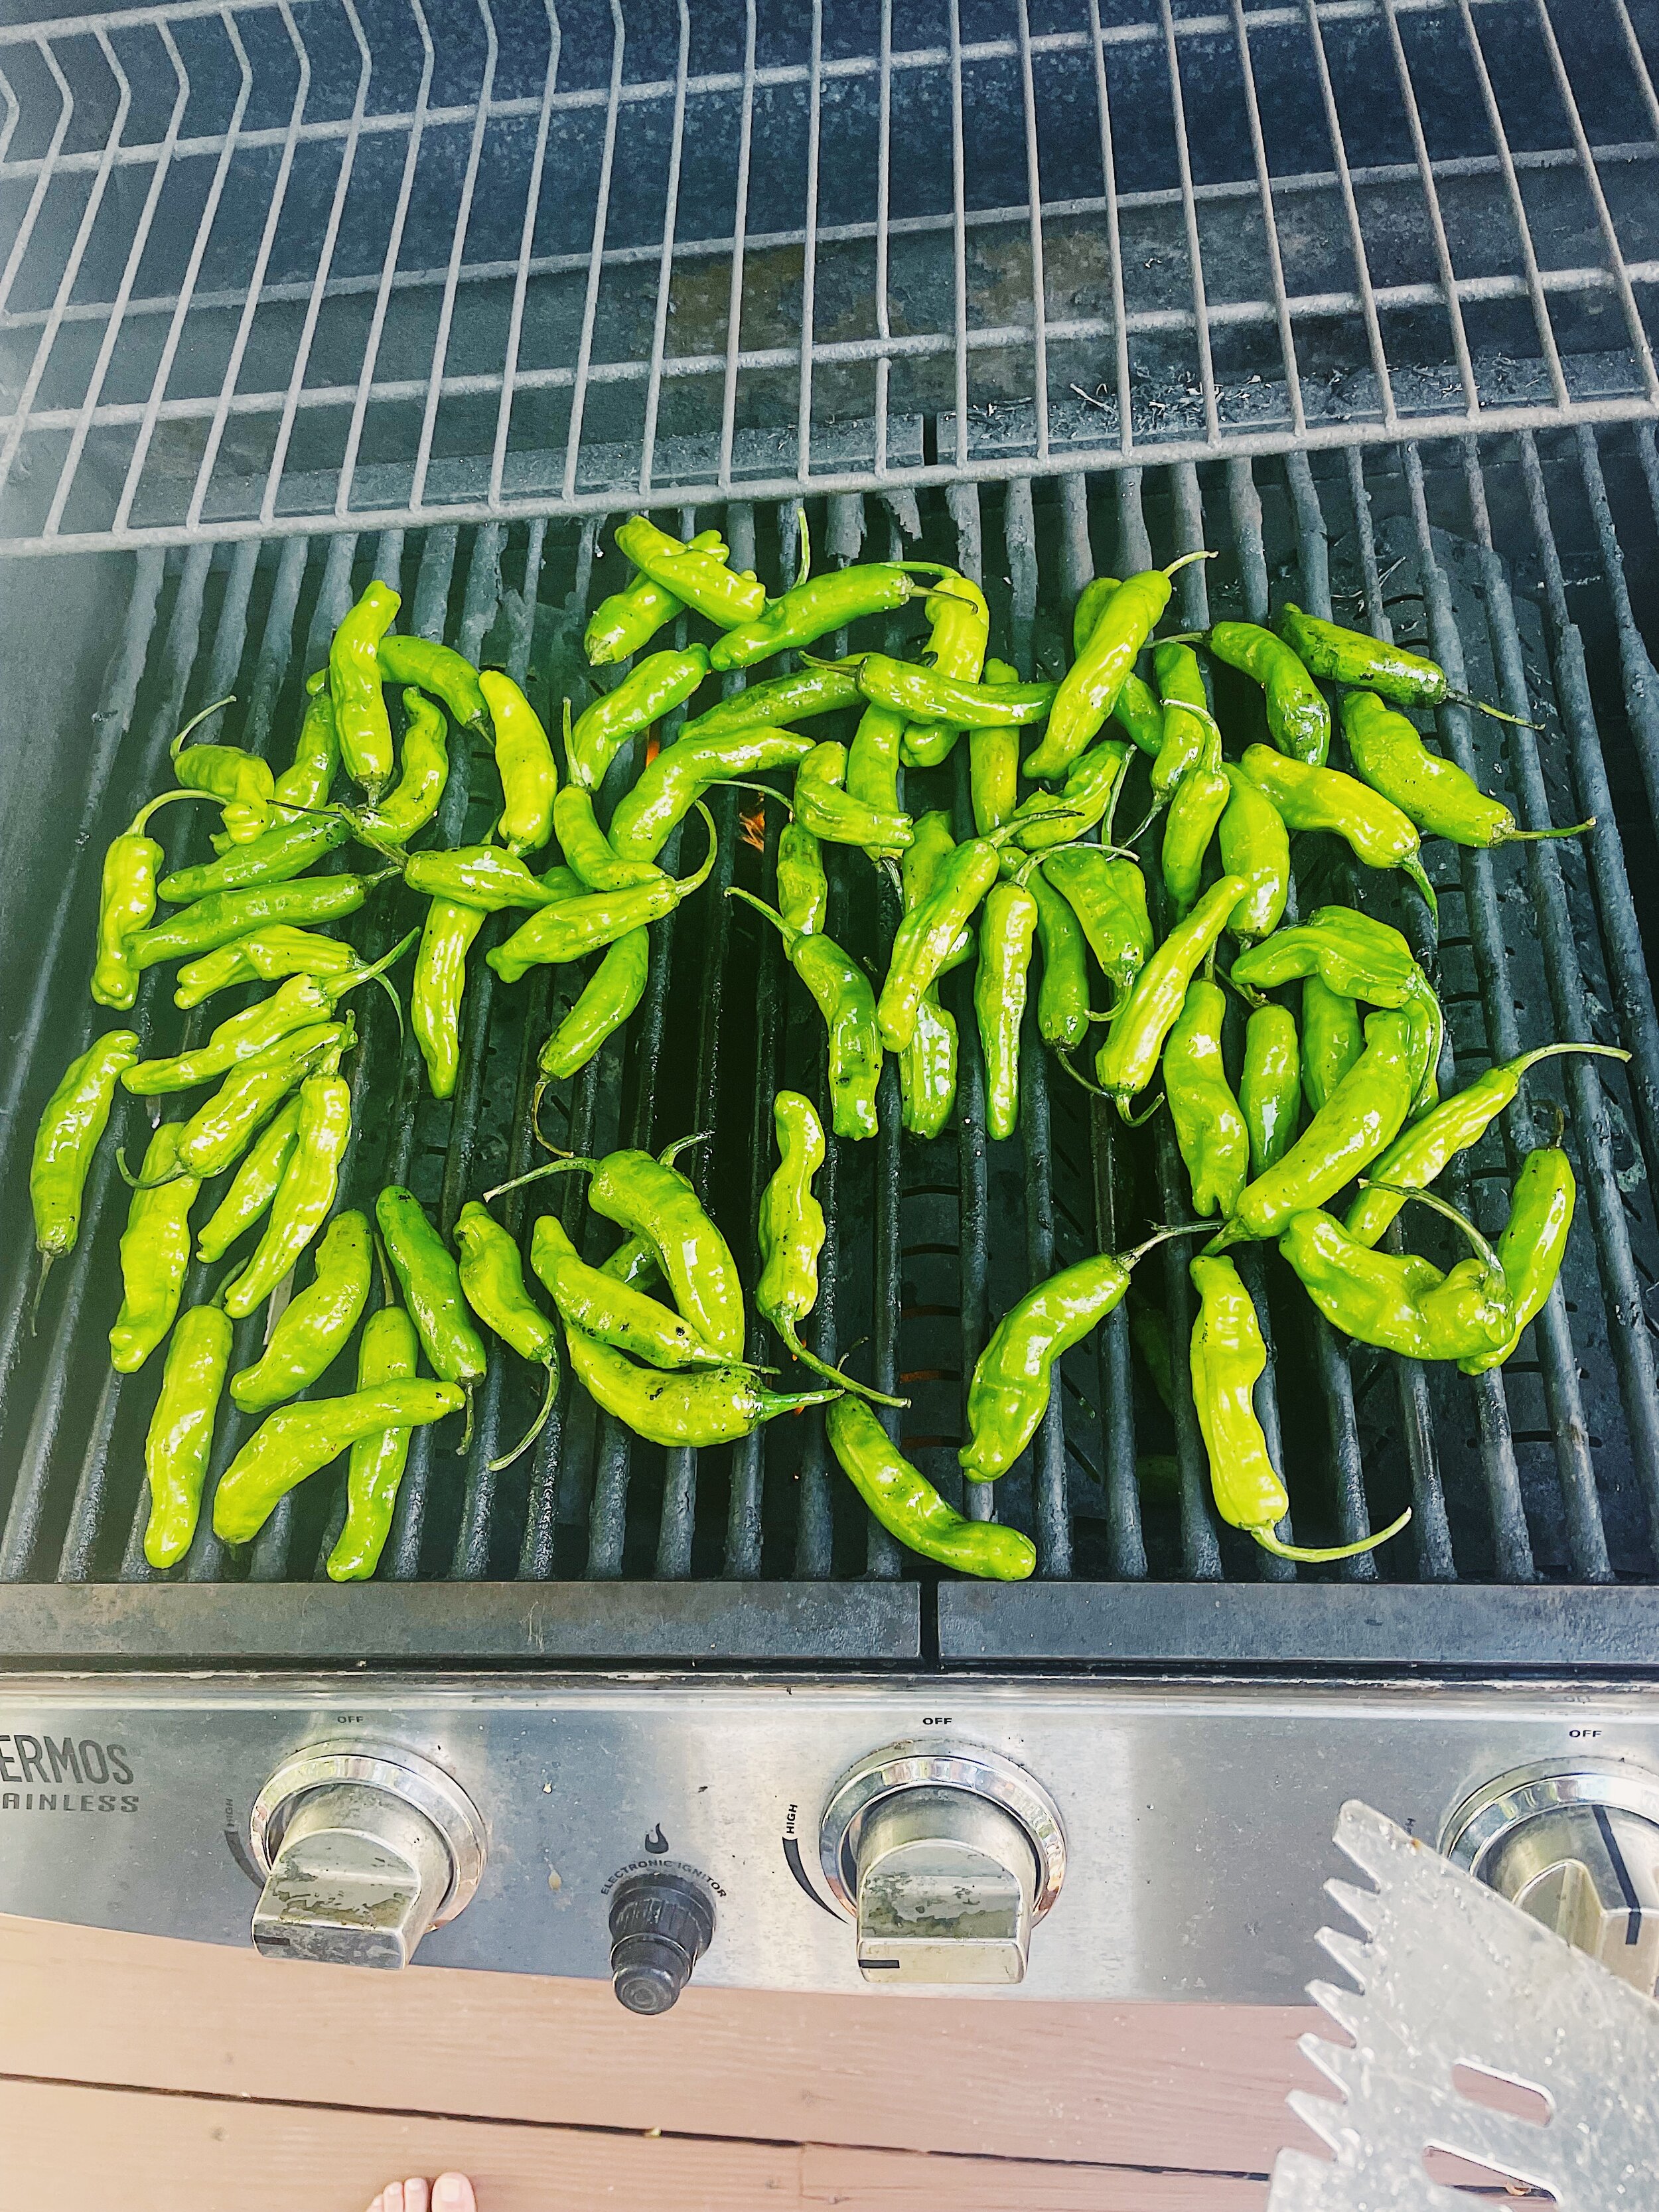 tiny-peppers-yuzu-kosho-alison-roman-grill.jpg